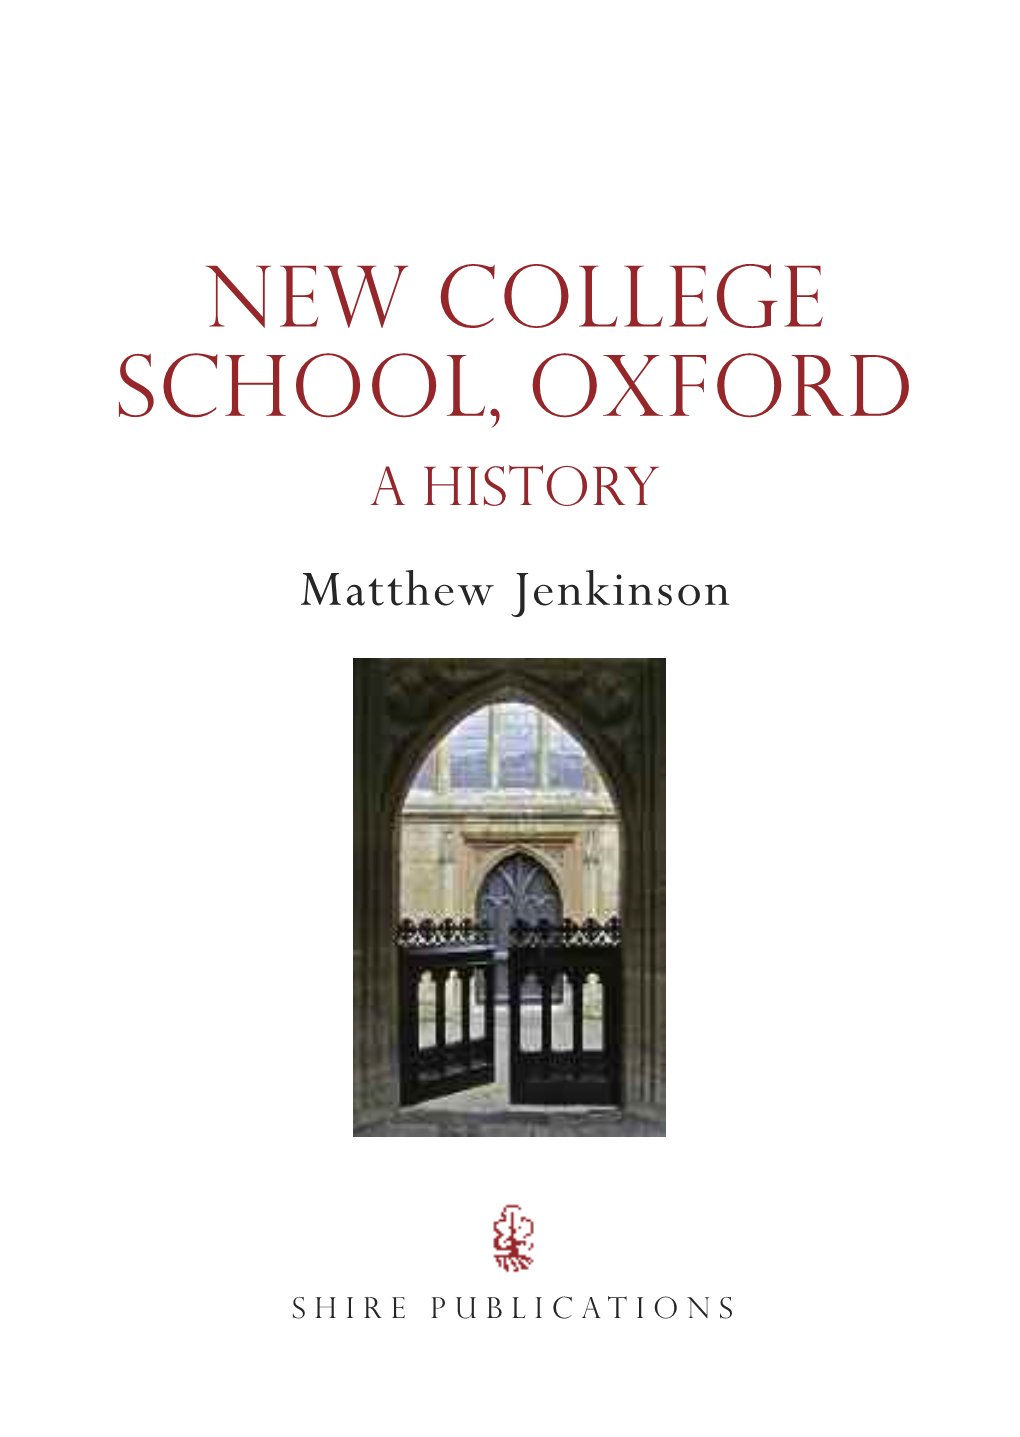 NEW COLLEGE SCHOOL, OXFORD a HISTORY Matthew Jenkinson